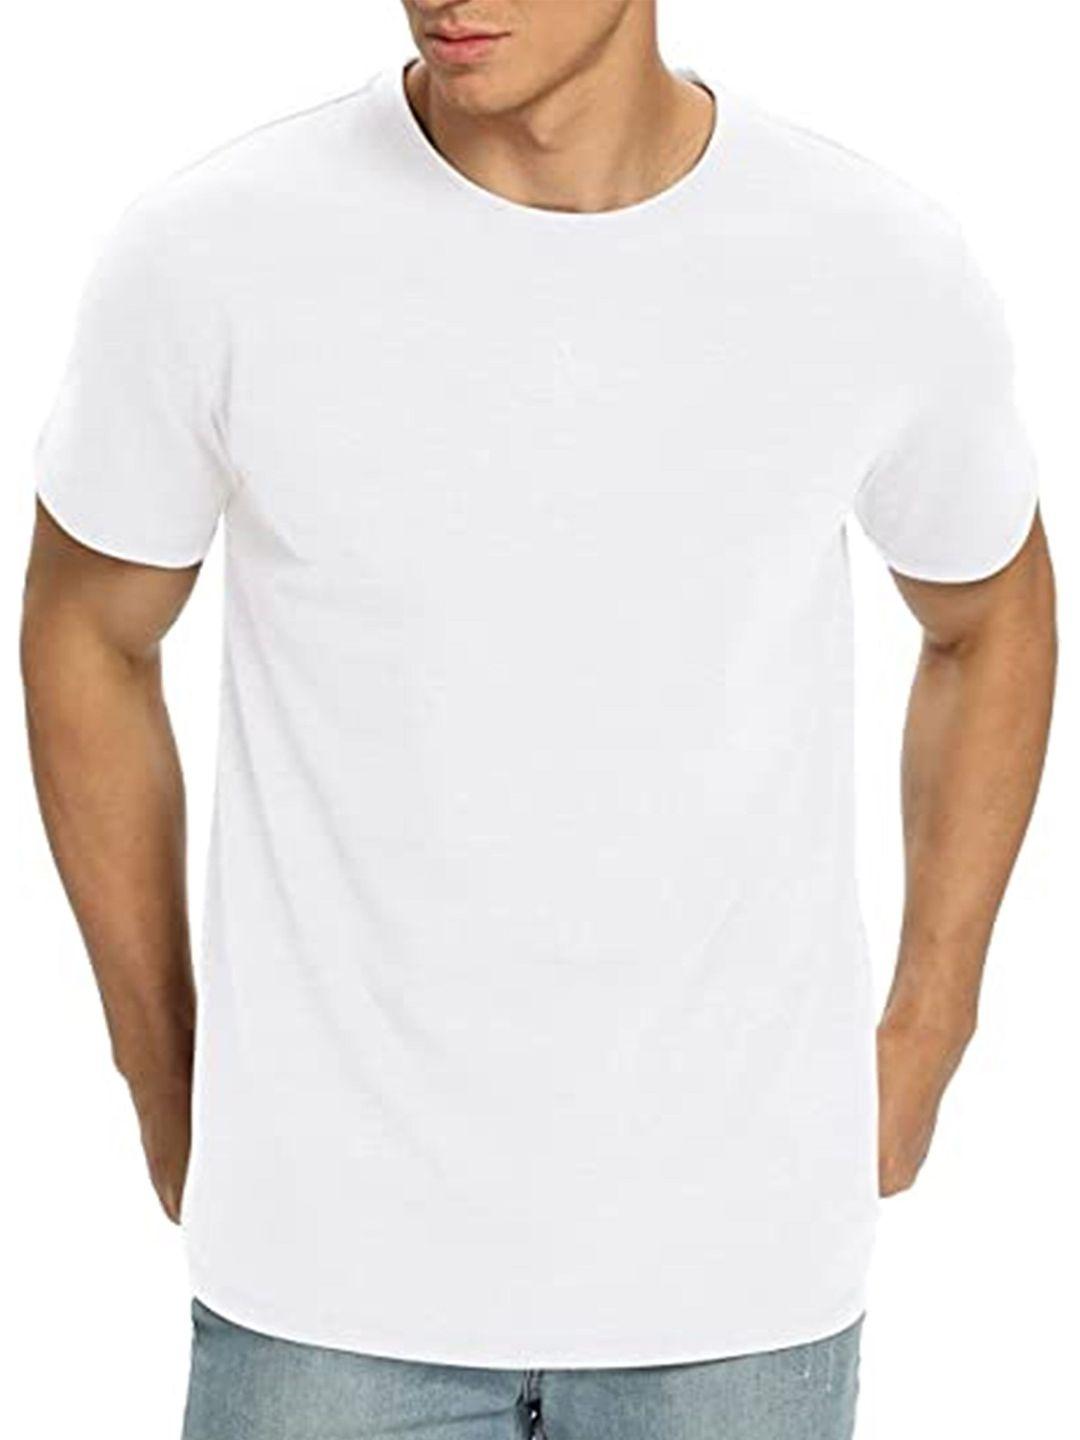 kaezri round neck cotton casual t-shirt